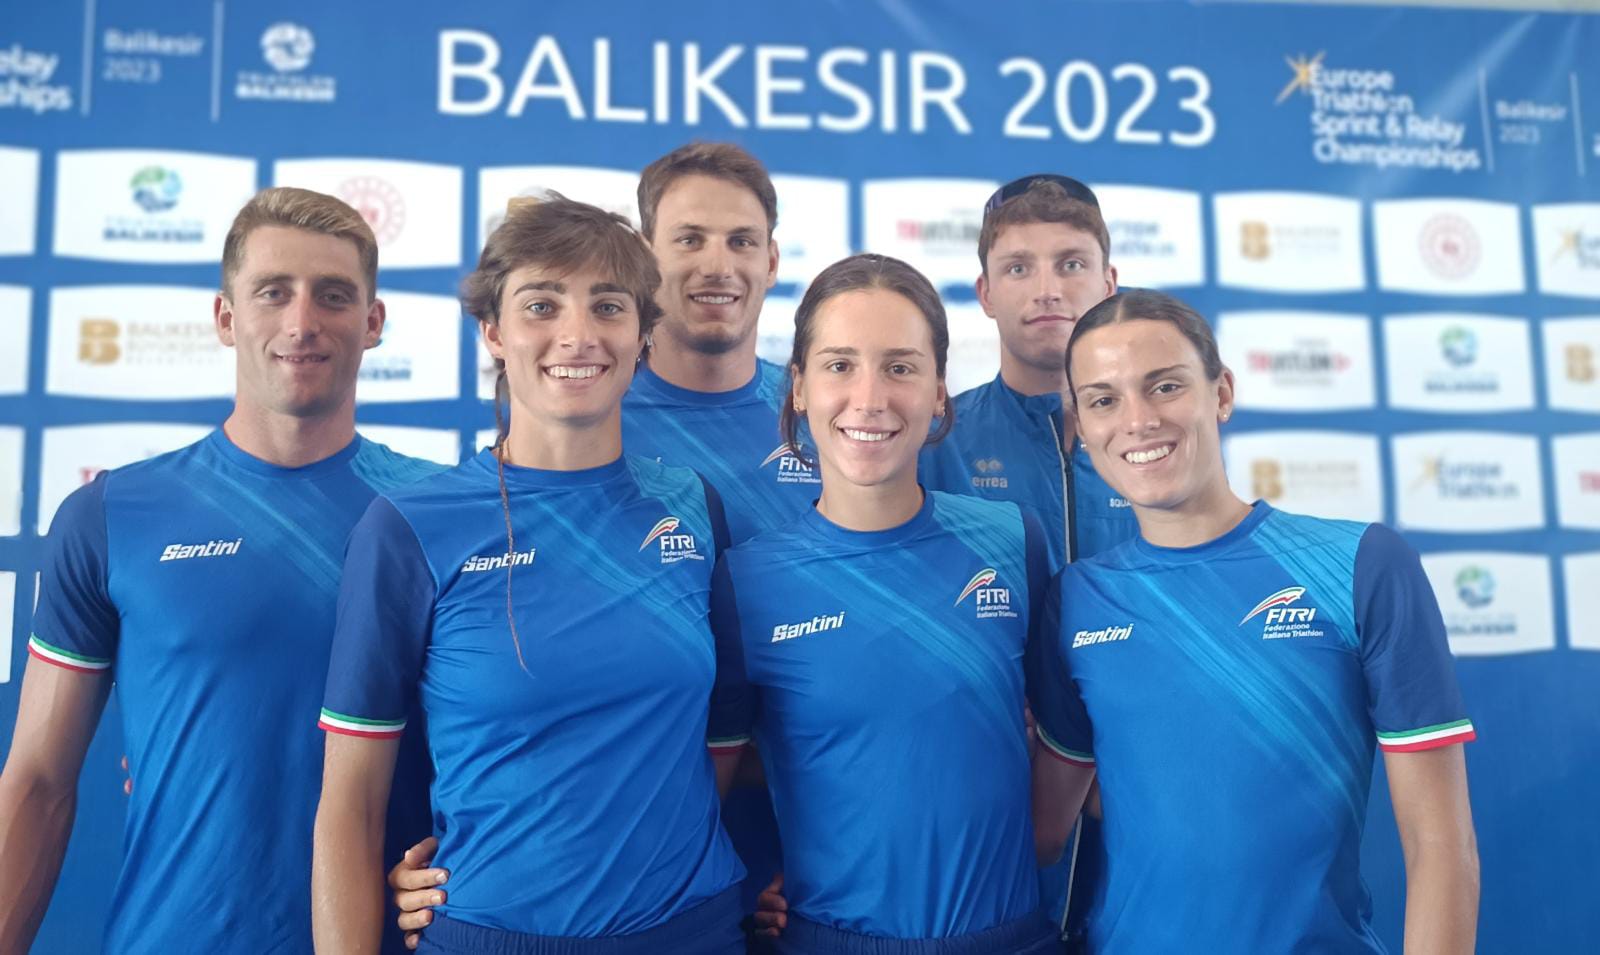 L'Italia porta 5 élite alle finali dell'Europe Triathlon Sprint Championships Balikesir